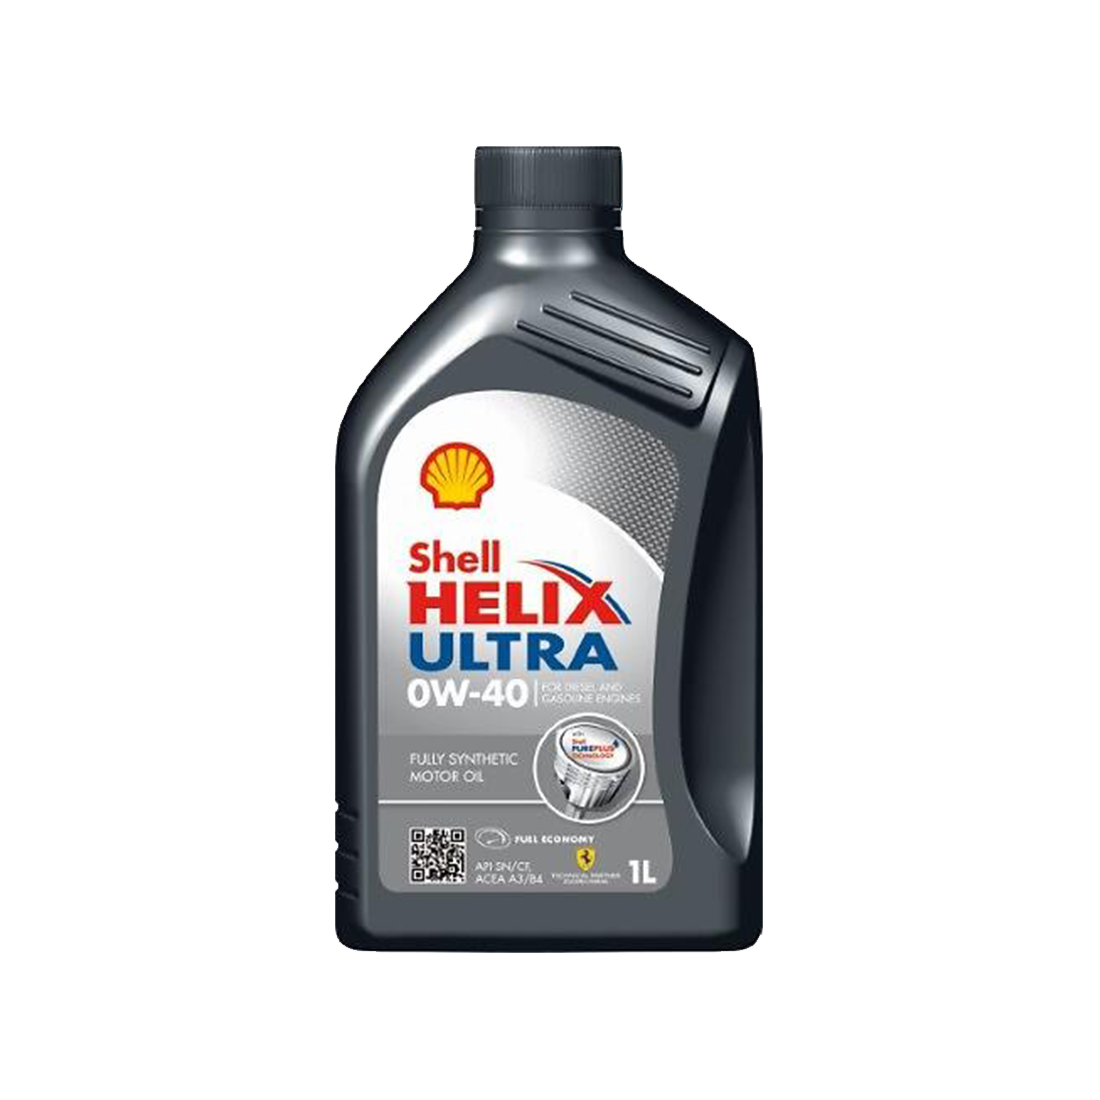 Syntetiskolja Shell Helix Ultra 0W-40, 1L